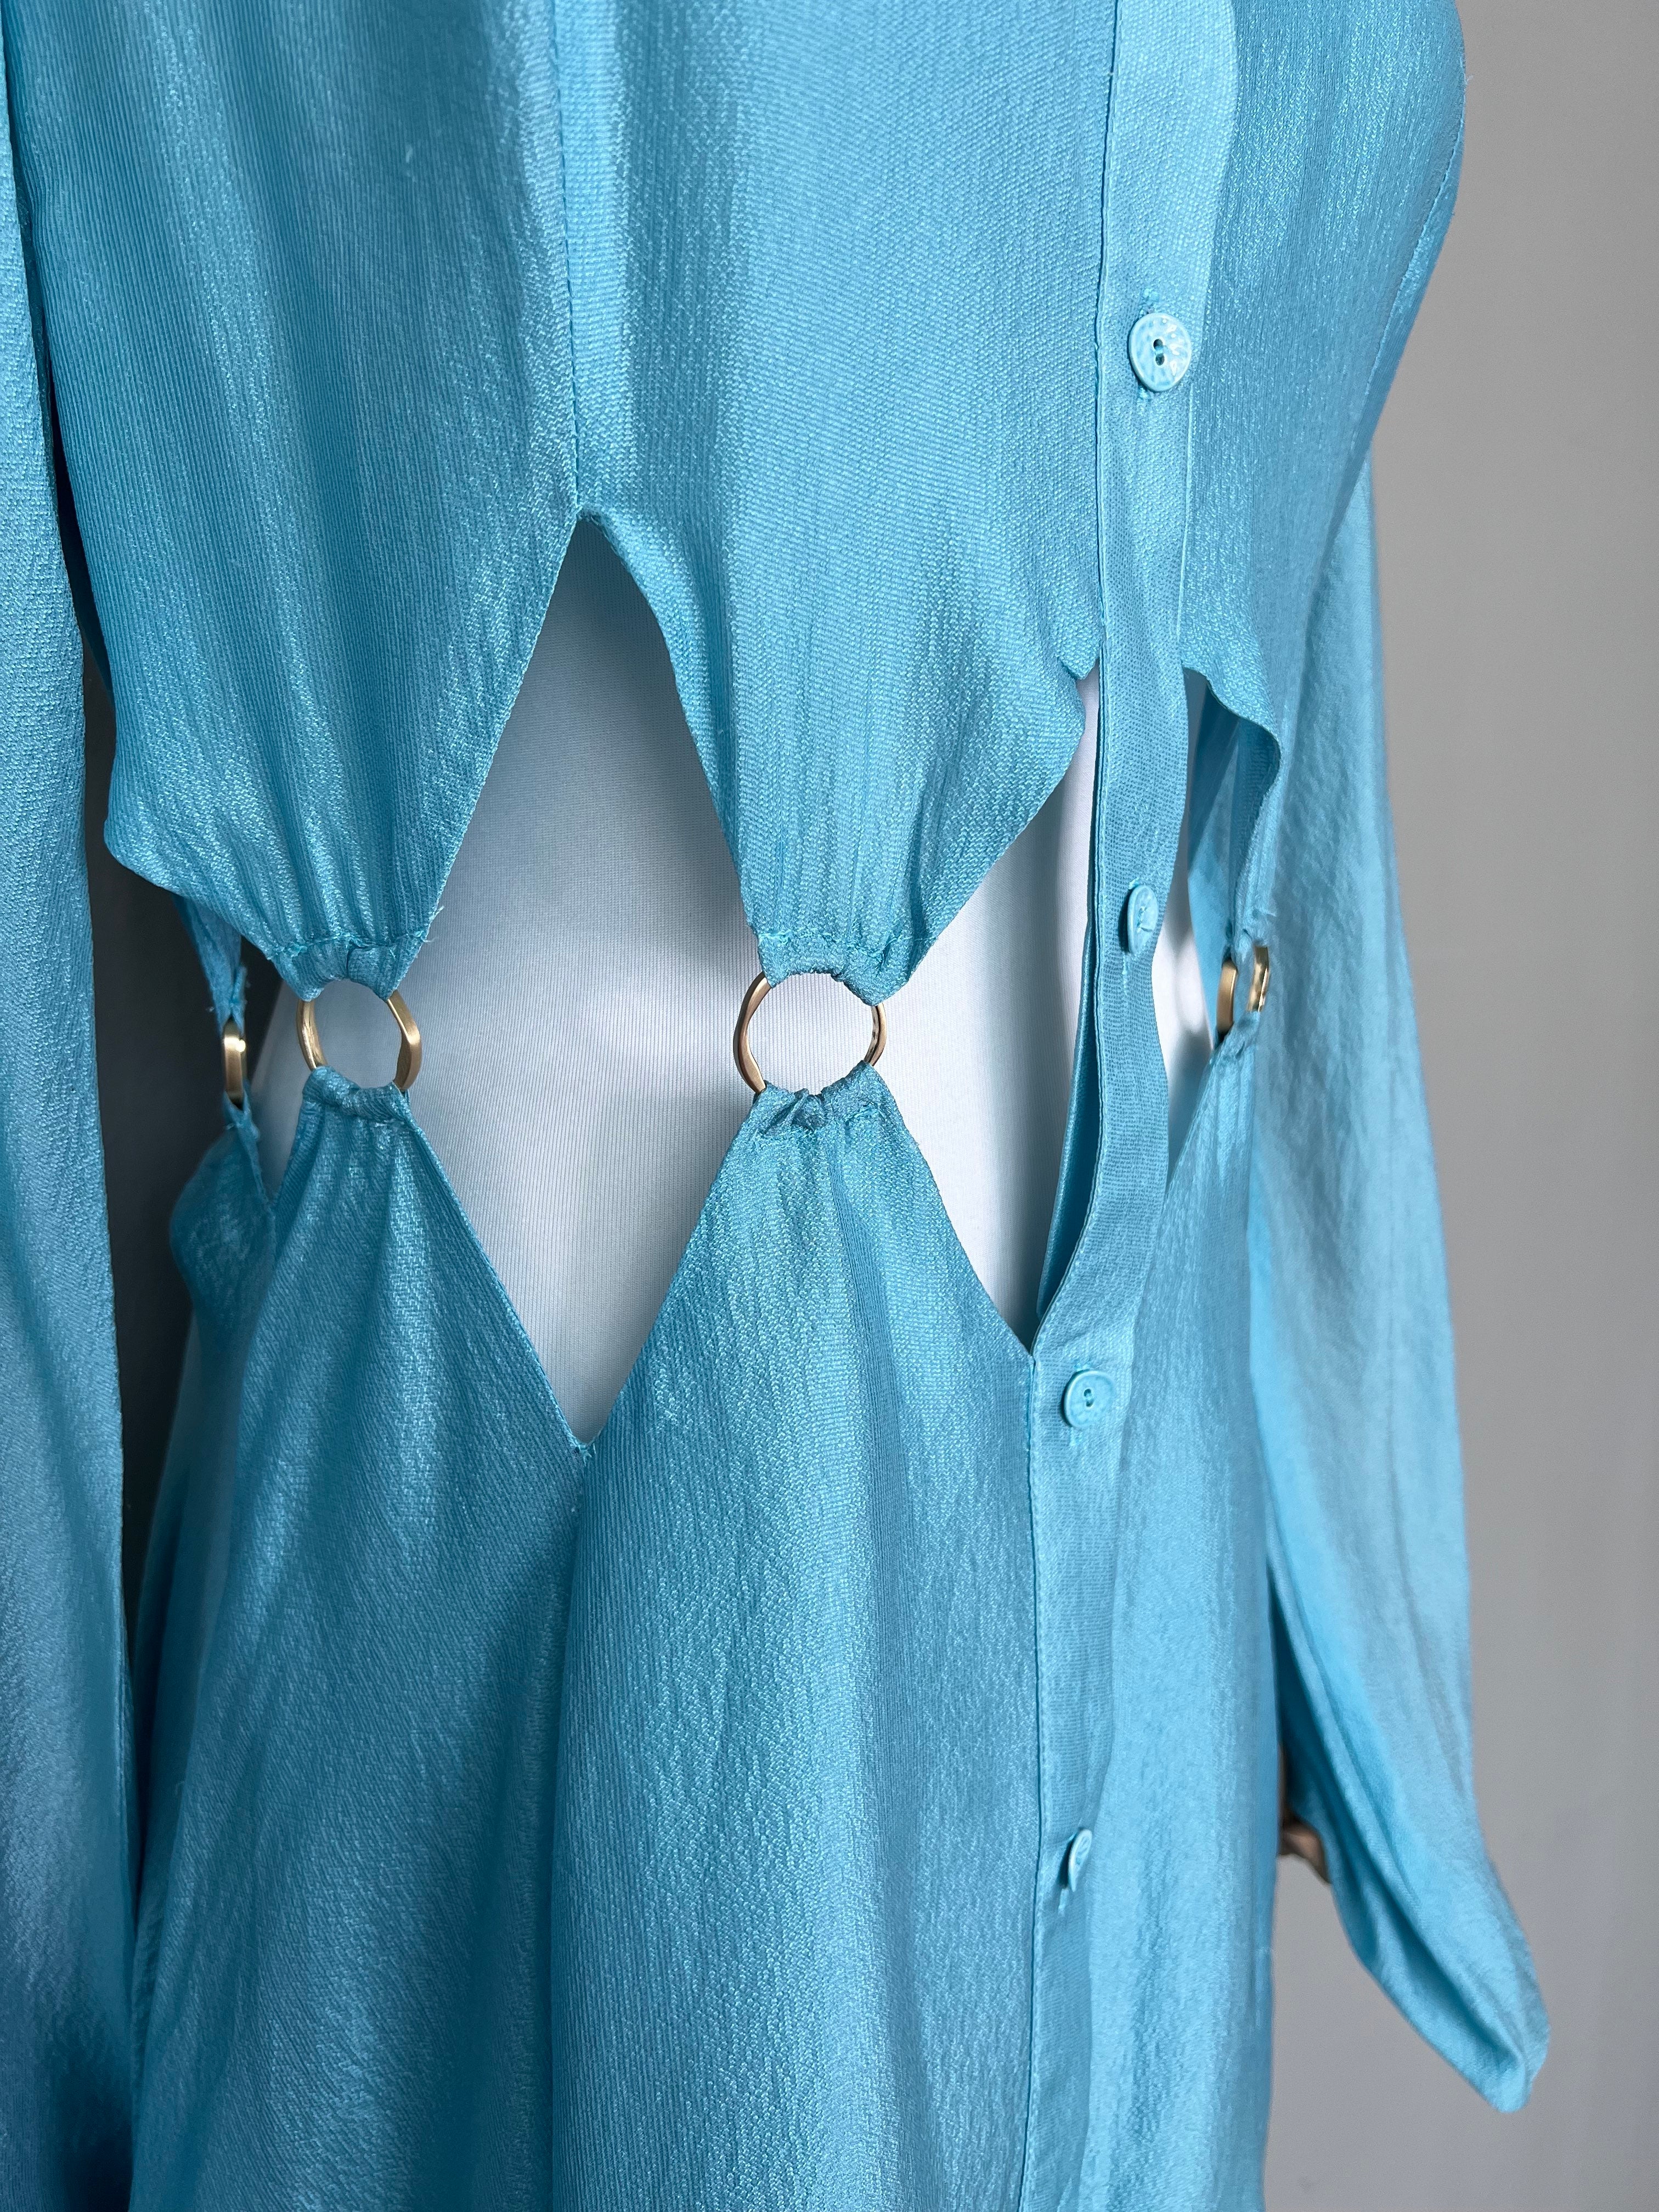 Blue button-up flowy dress with gold holes across waistline - CULT GAIA